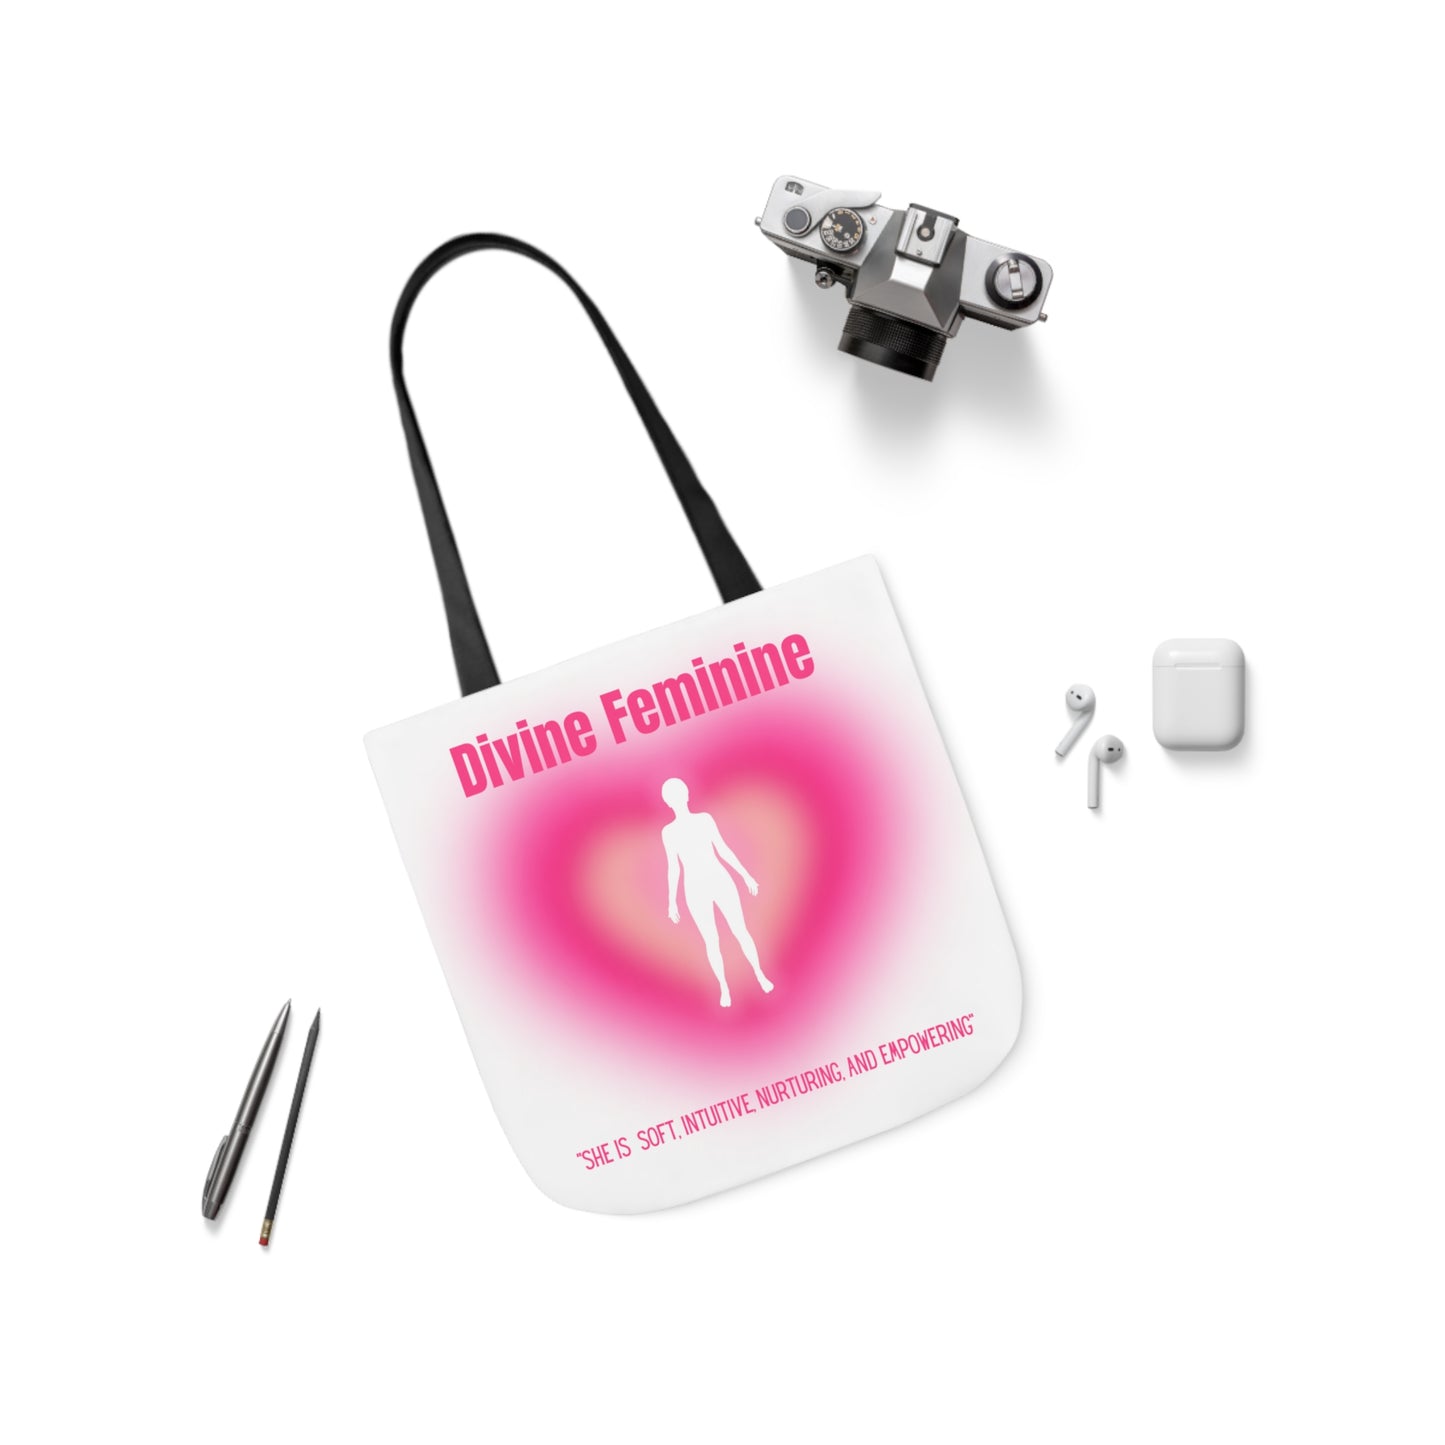 Divine Feminine Tote Bag, 5-Color Straps